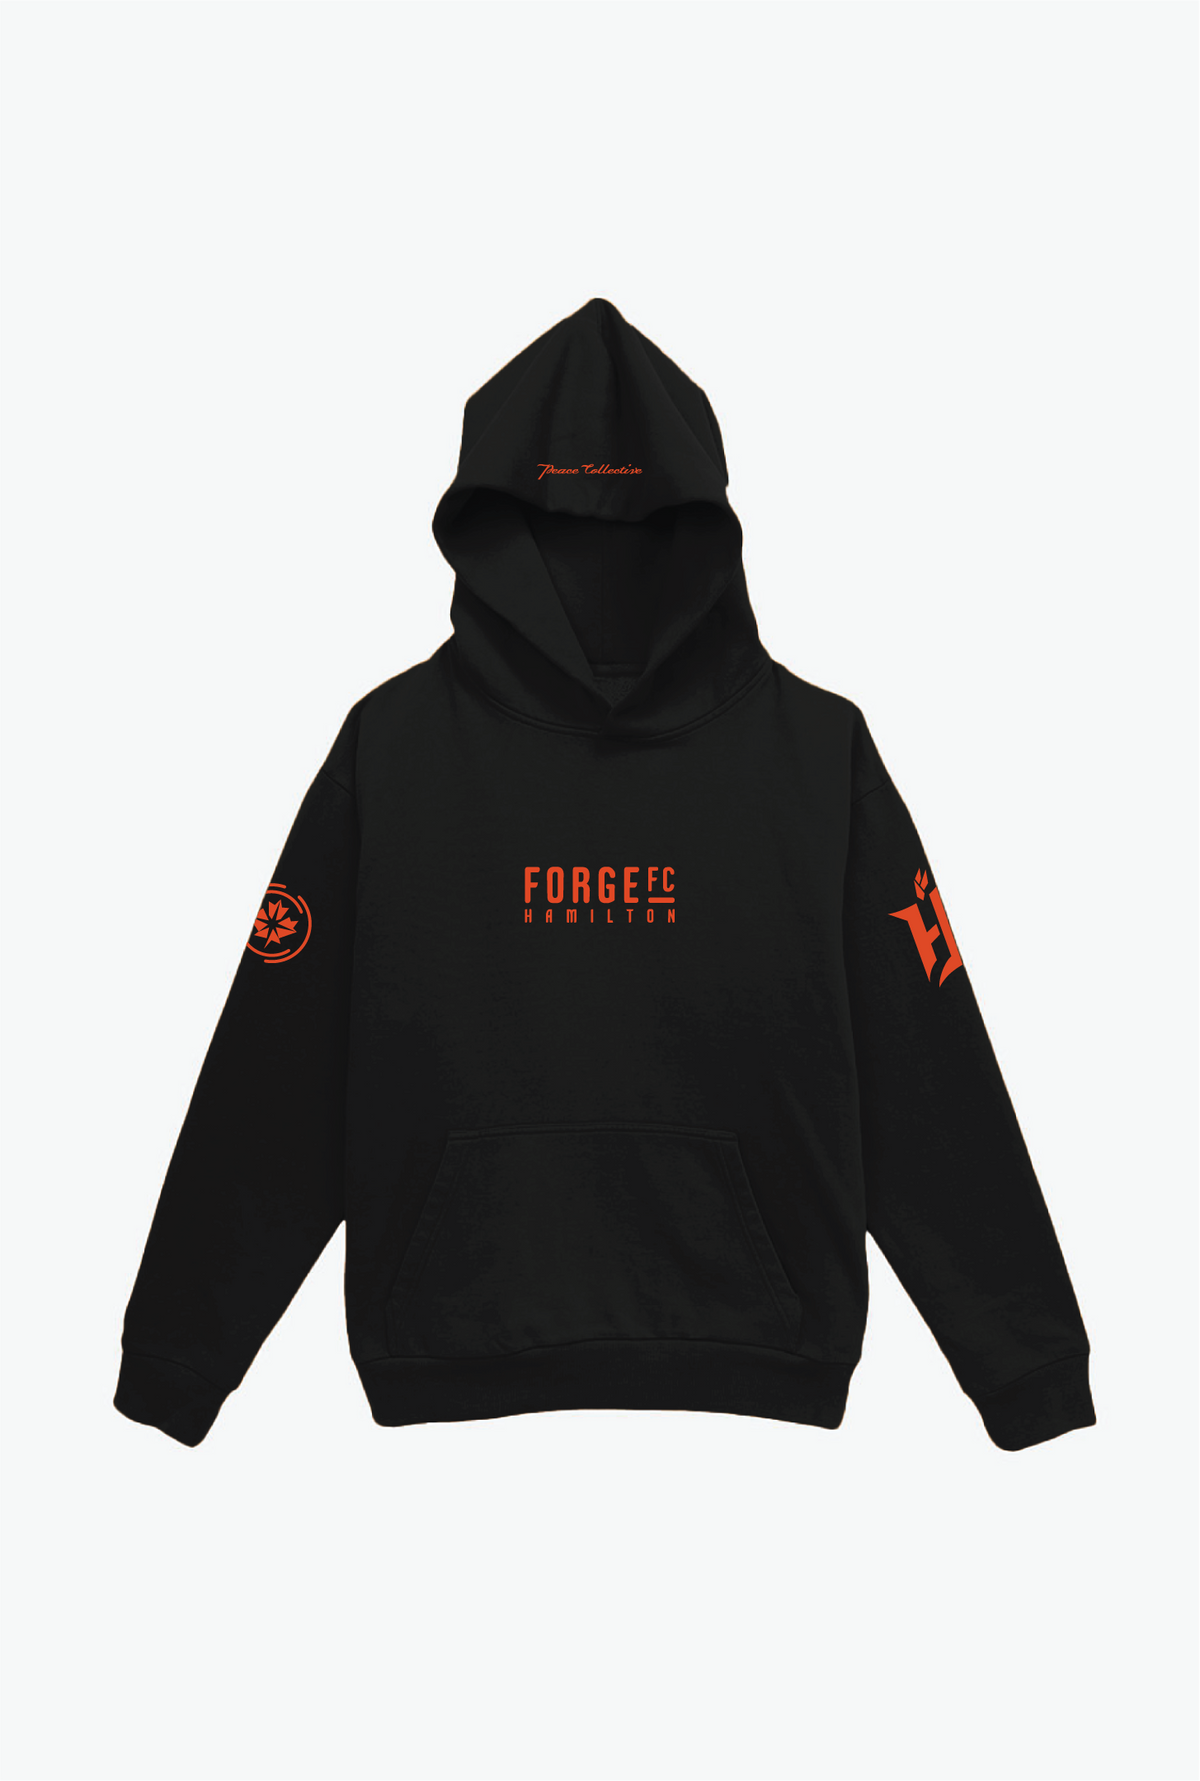 Forge FC Heavyweight Hoodie - Black